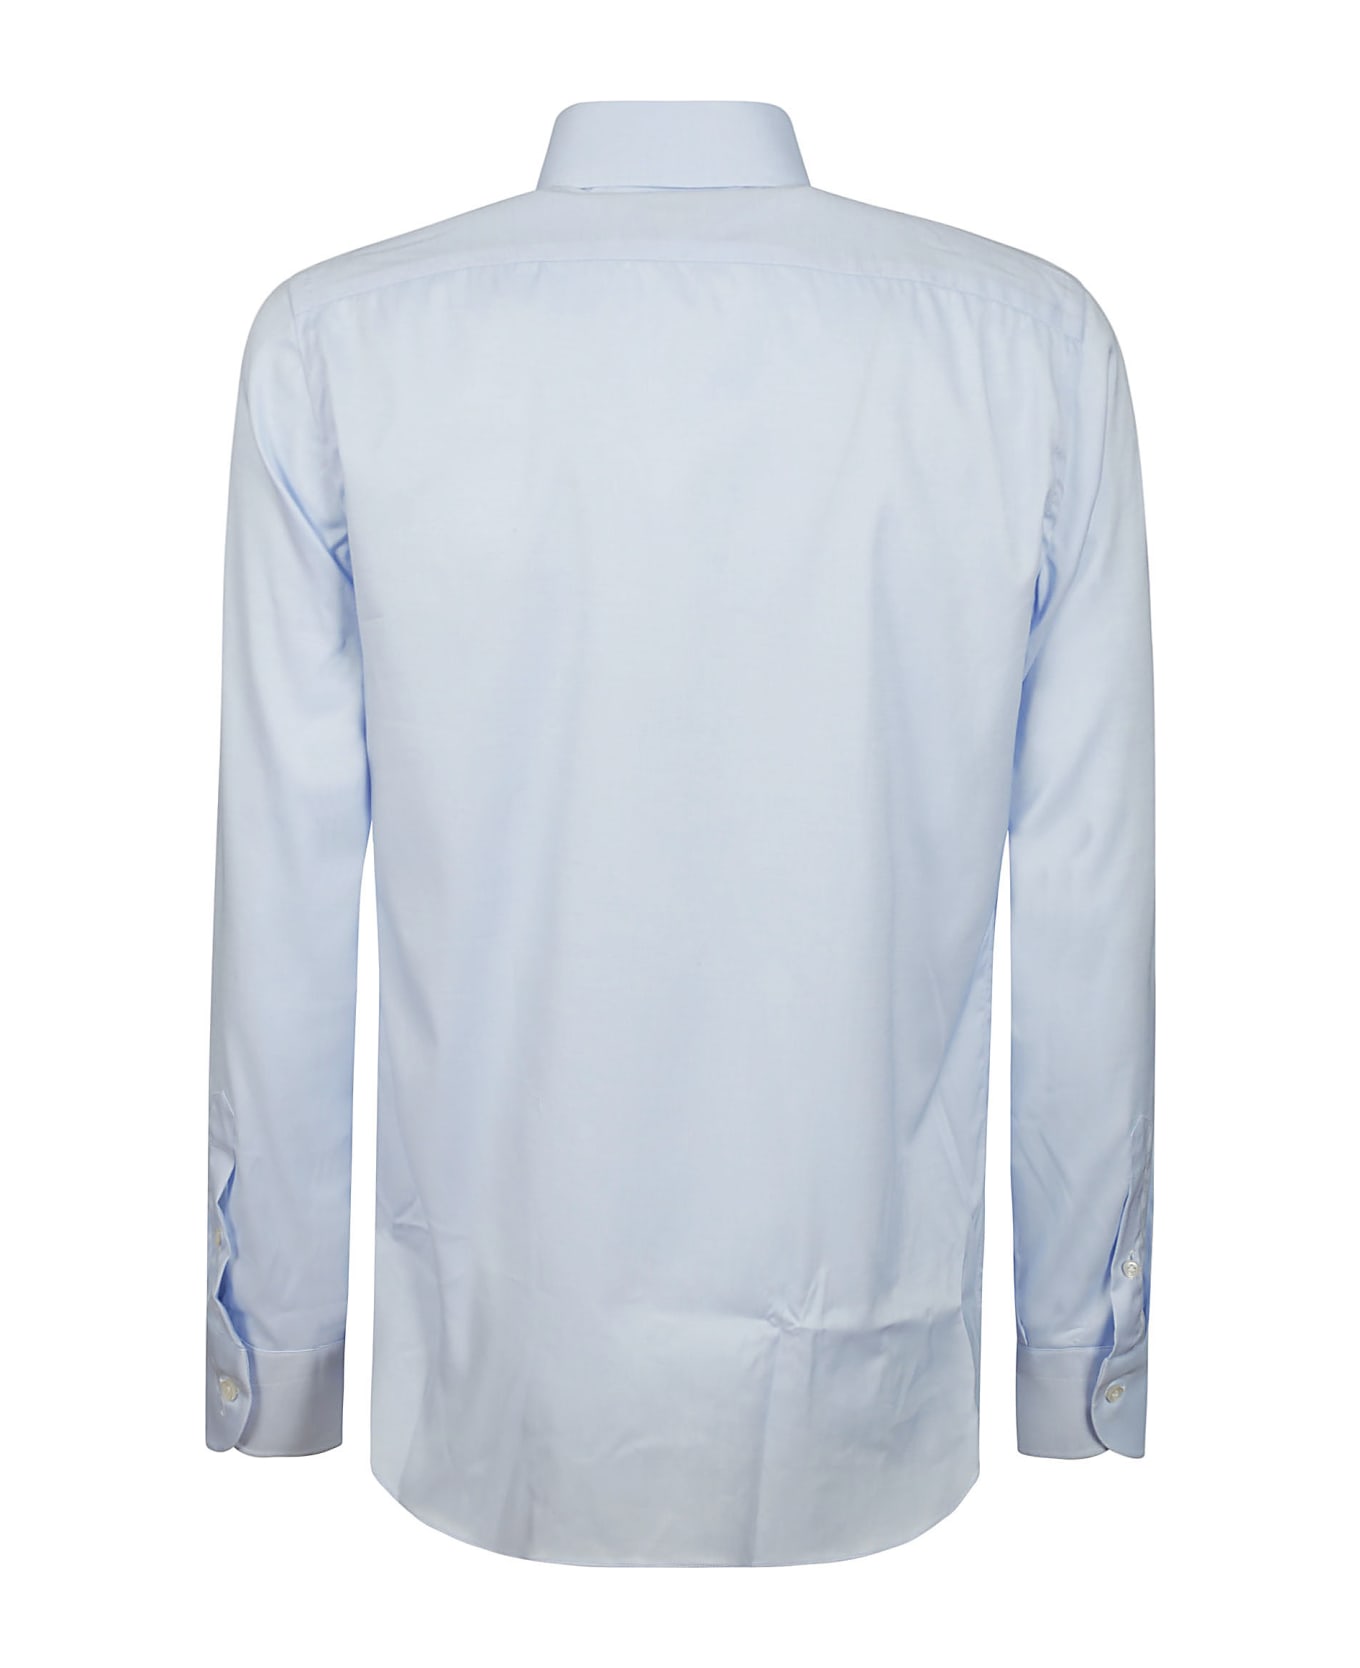 Borriello Napoli Shirt No Iron - Blue